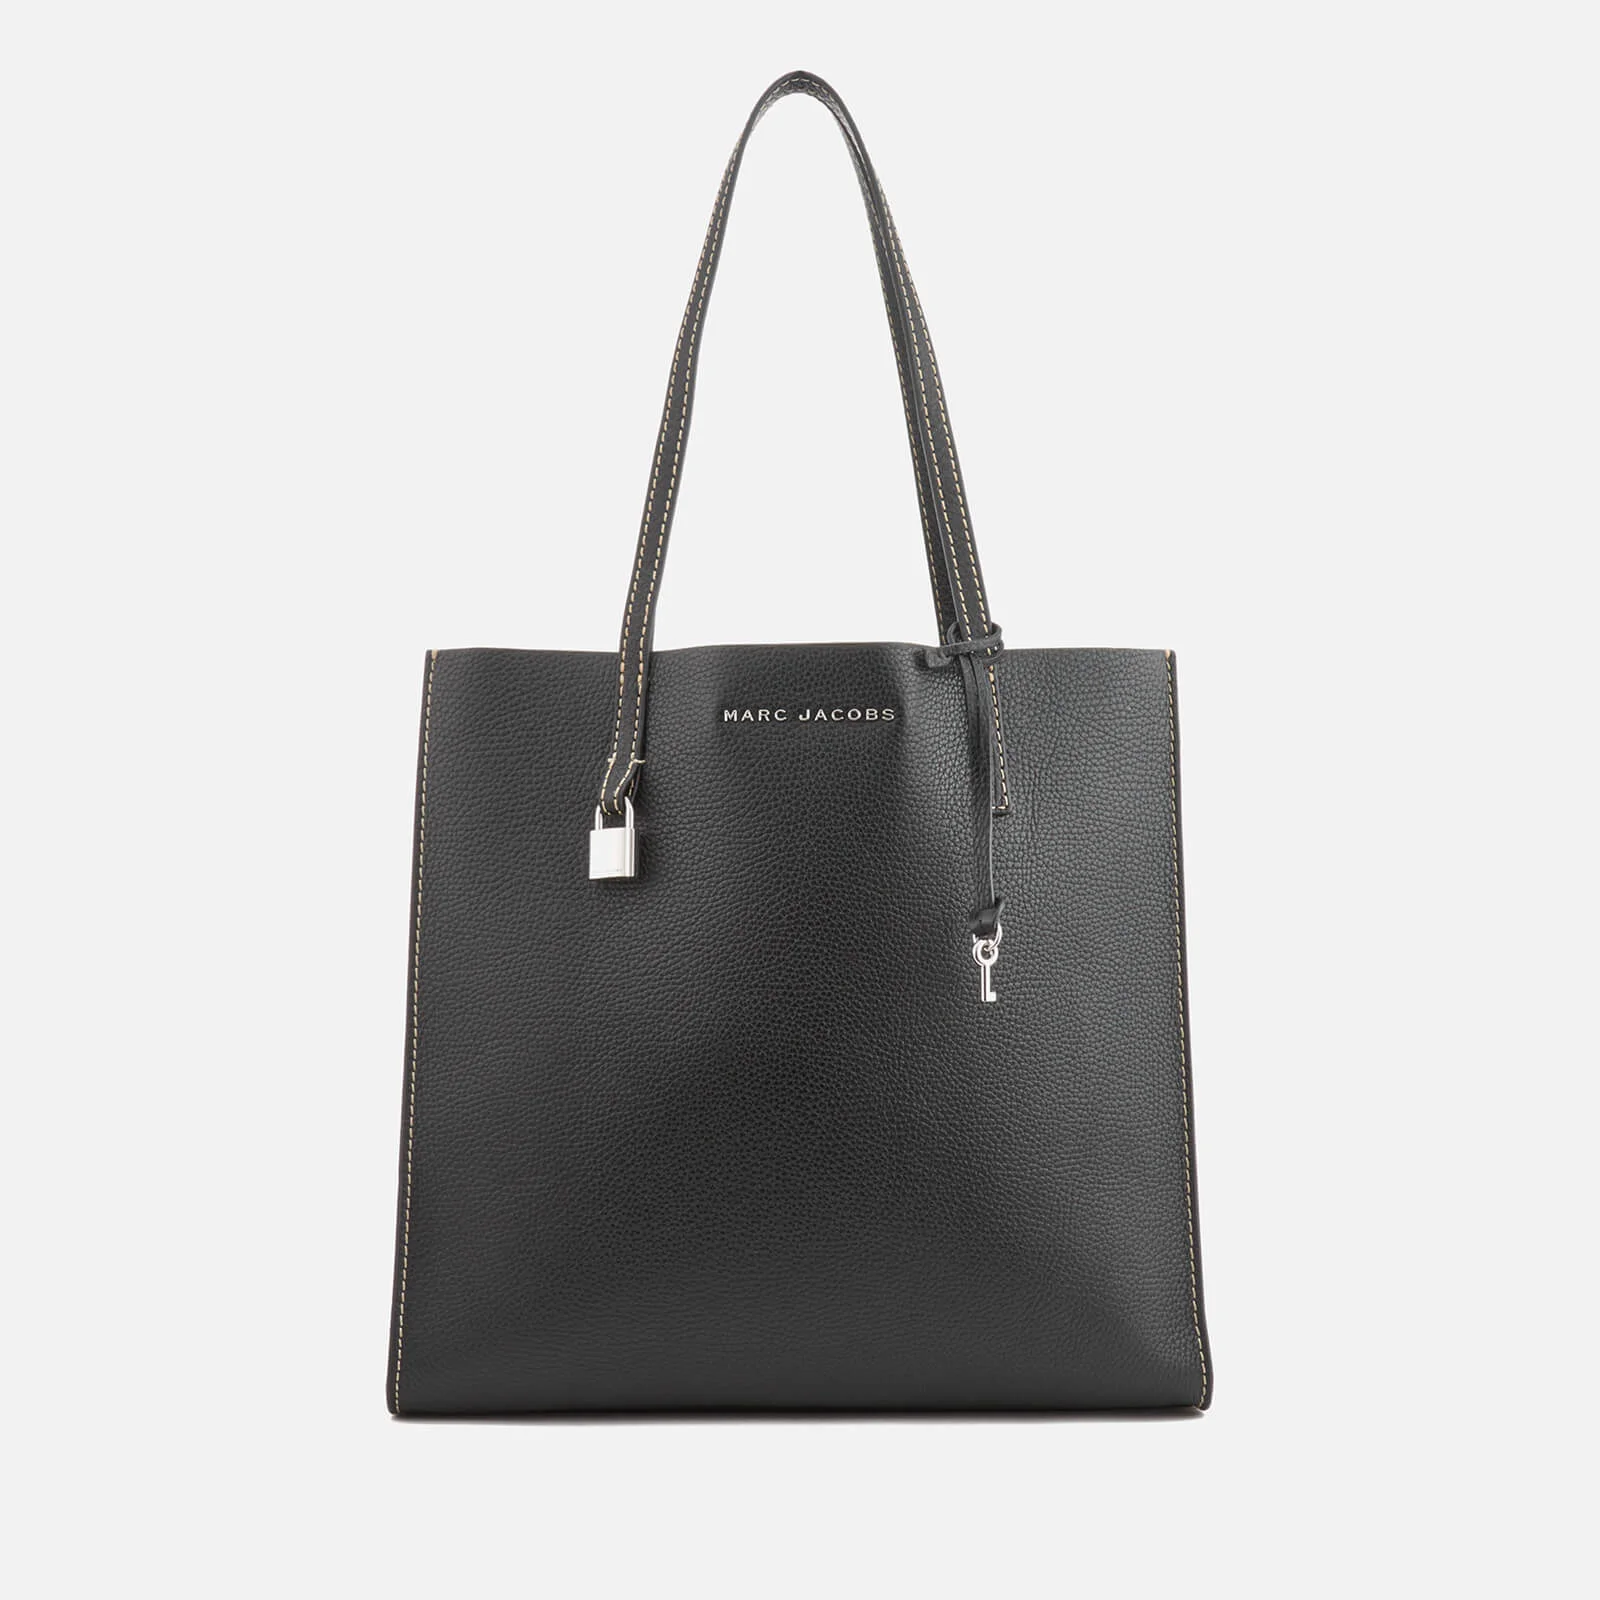 Marc Jacobs Women's The Grind Shopper Bag - Black Image 1